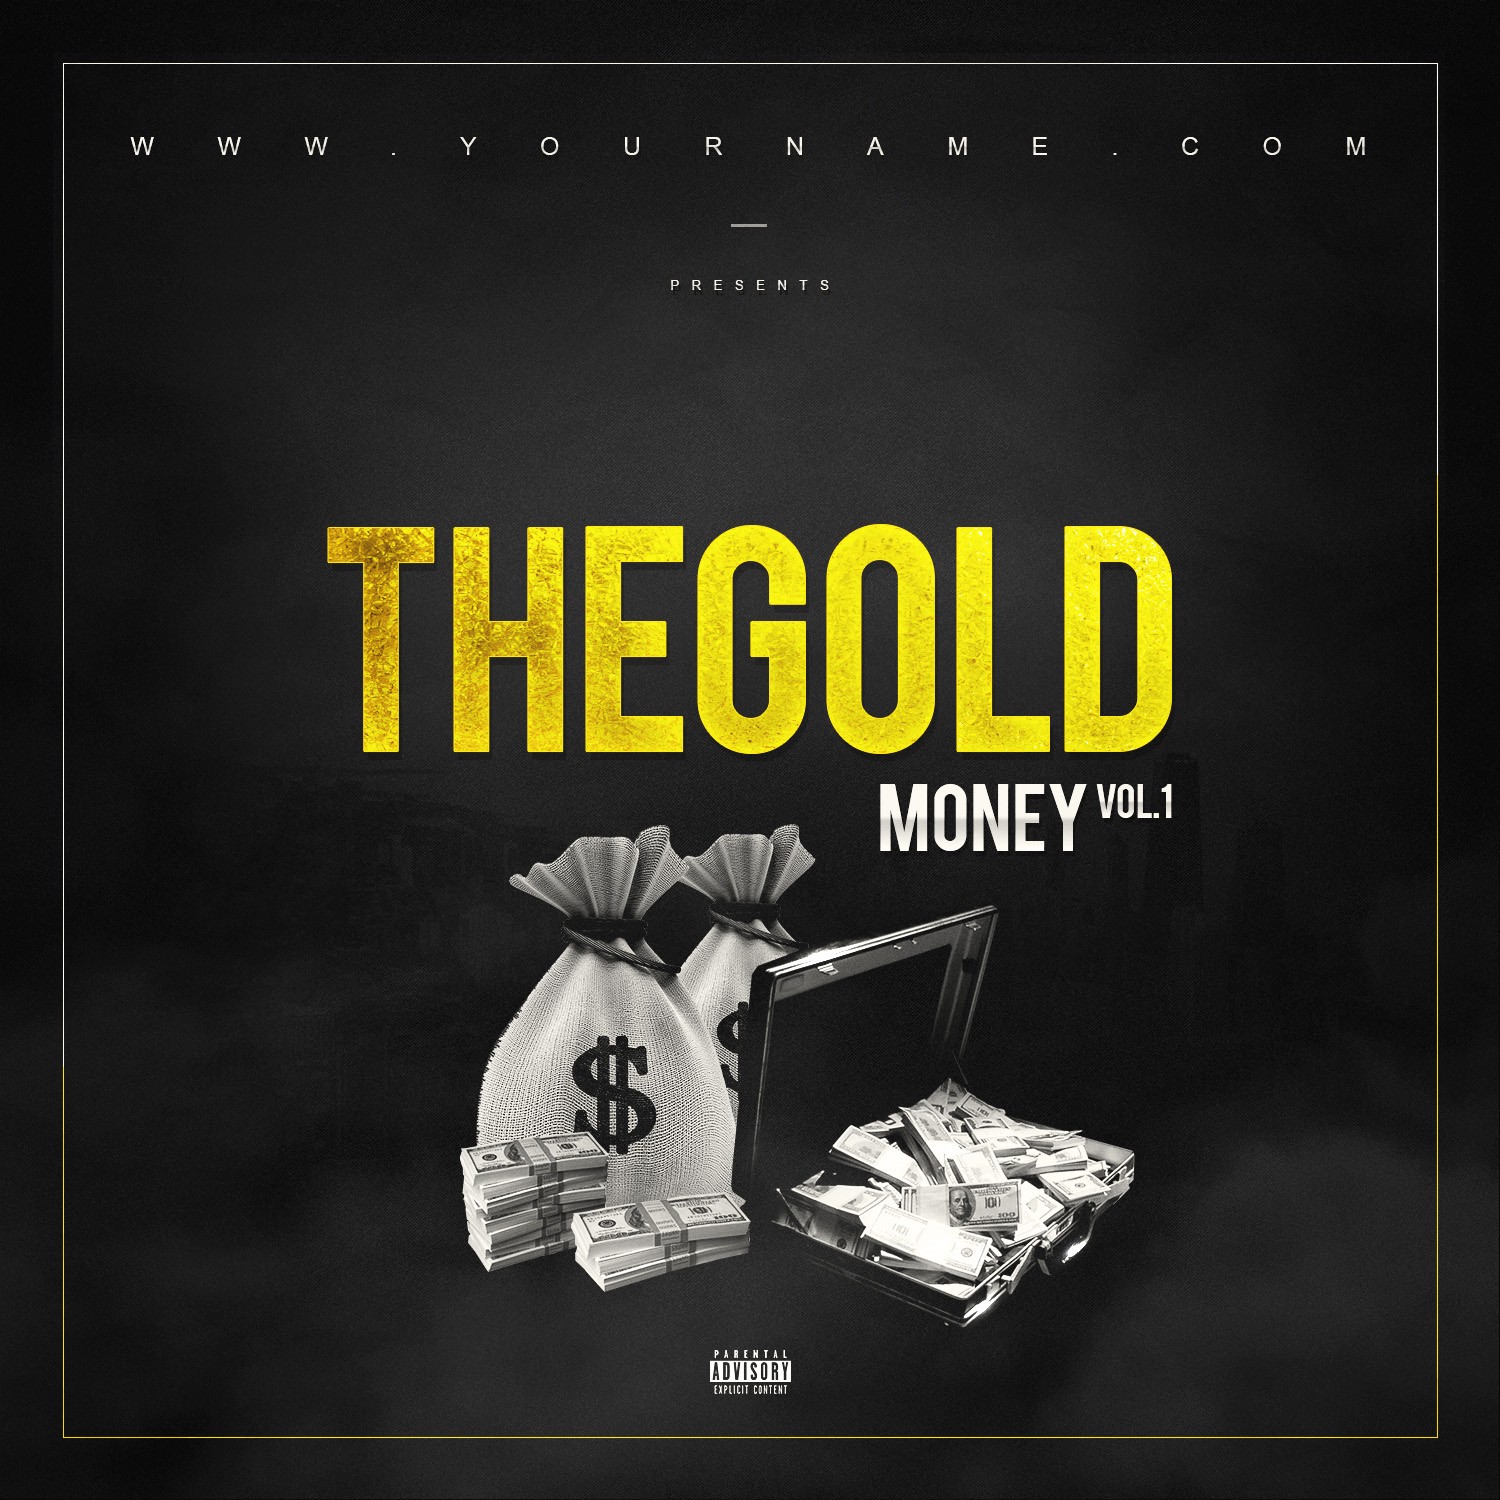 Gold Money Mixtape Cover Template